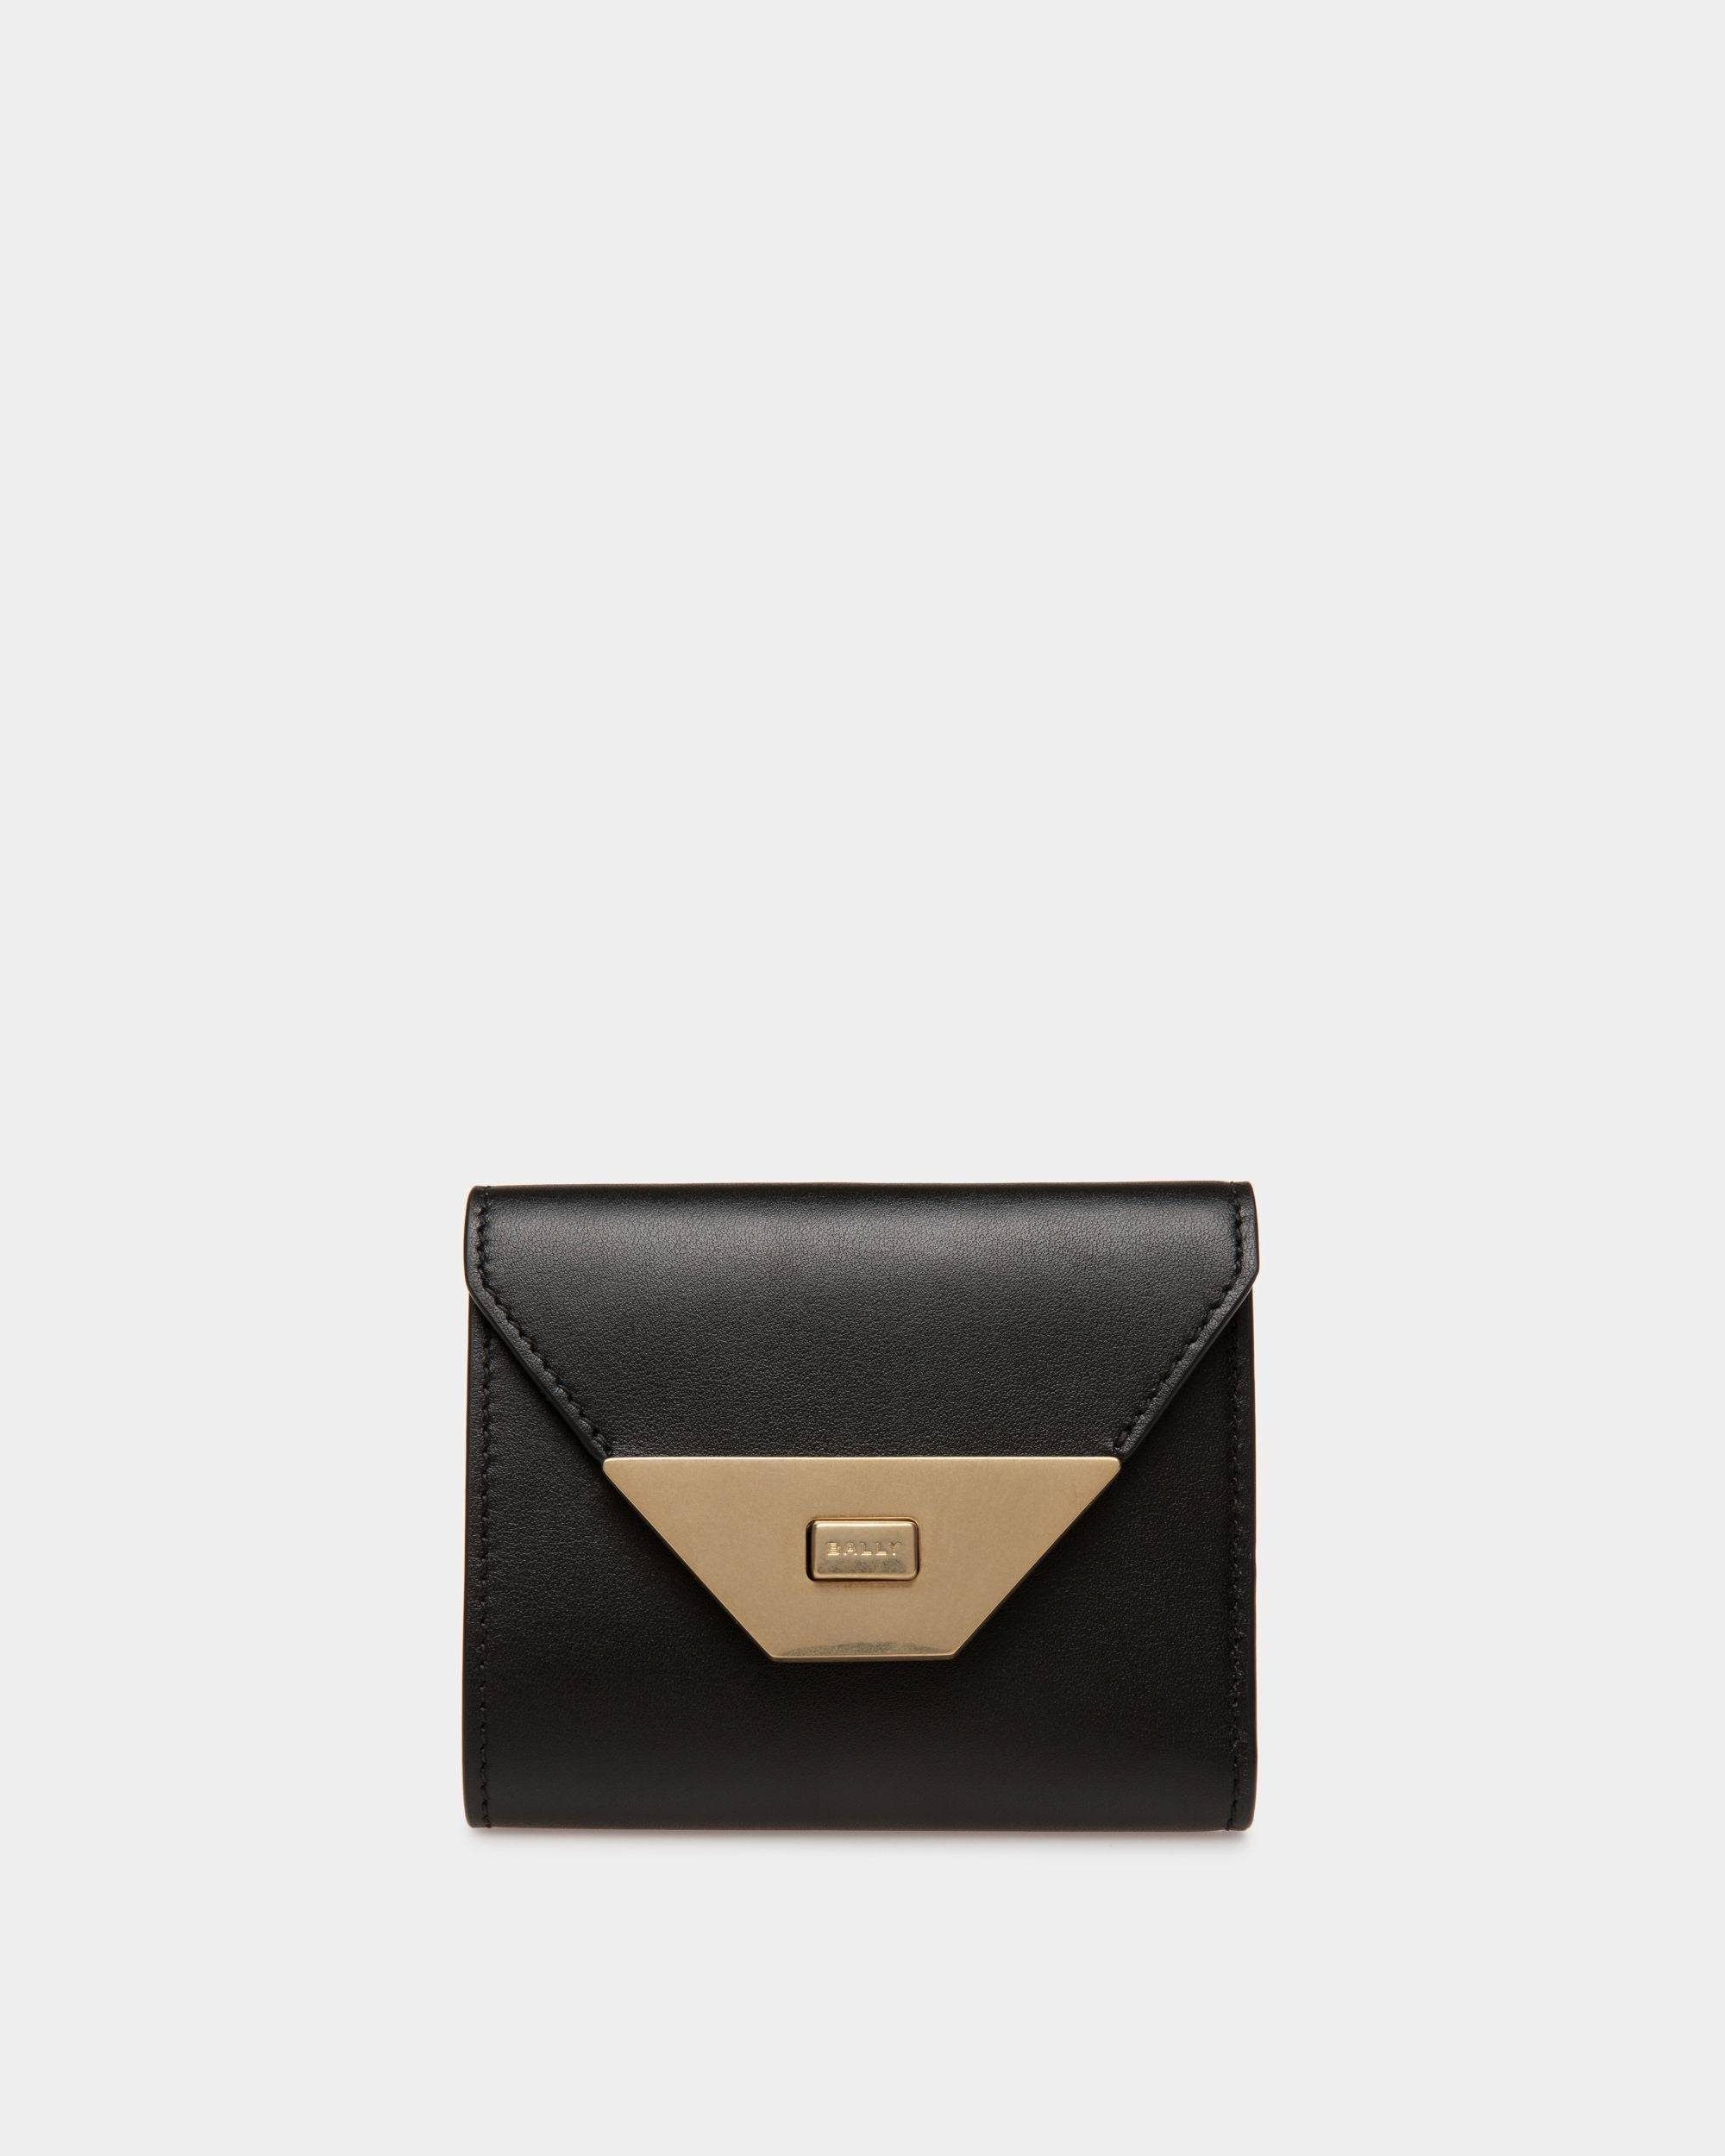 Tilt | Women's Wallet in Black Leather | Bally | Still Life Front